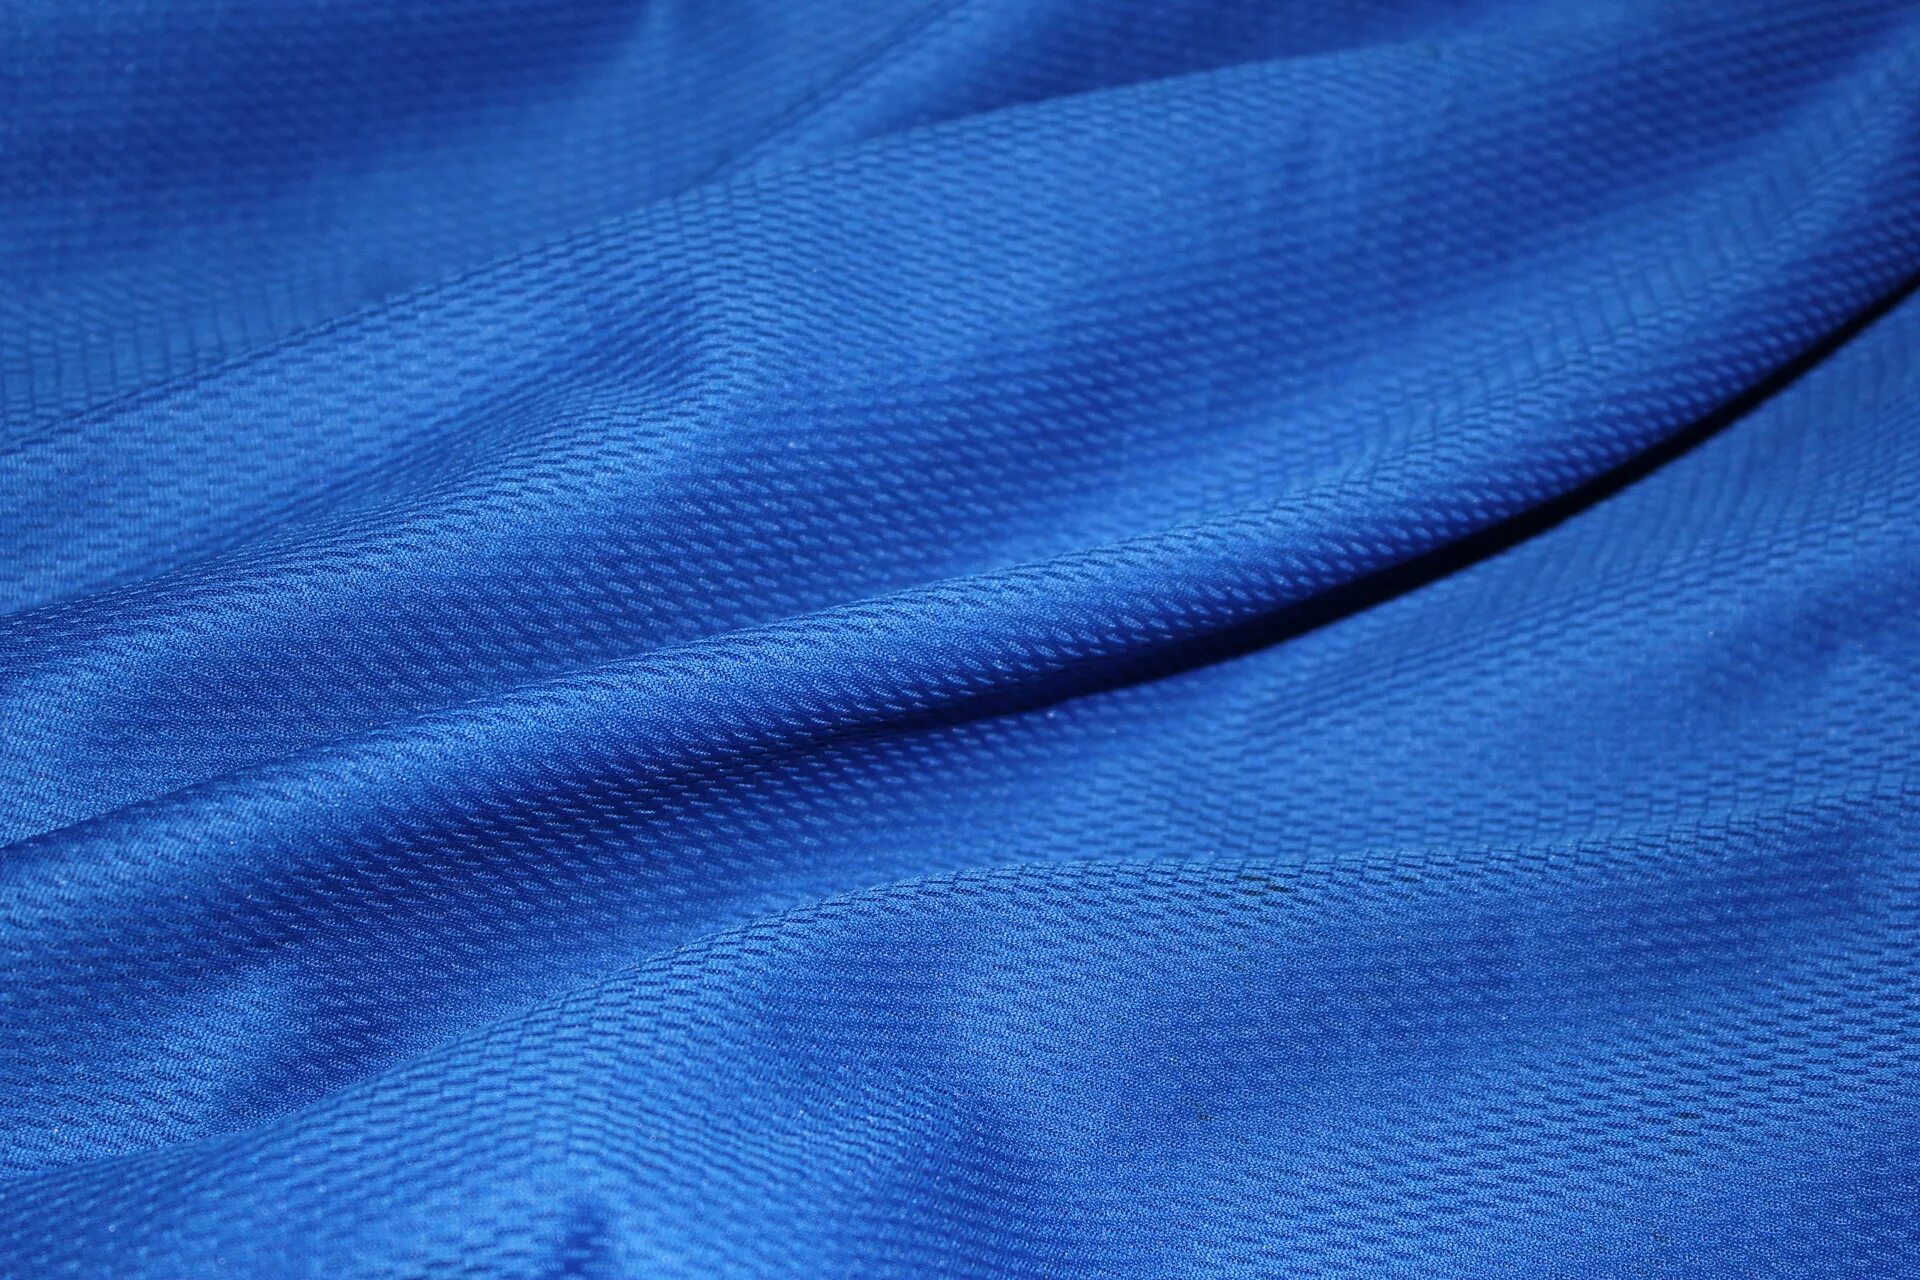 Ткань снизу. Ткань. Голубая ткань. Текстура ткани. Синяя ткань текстура.